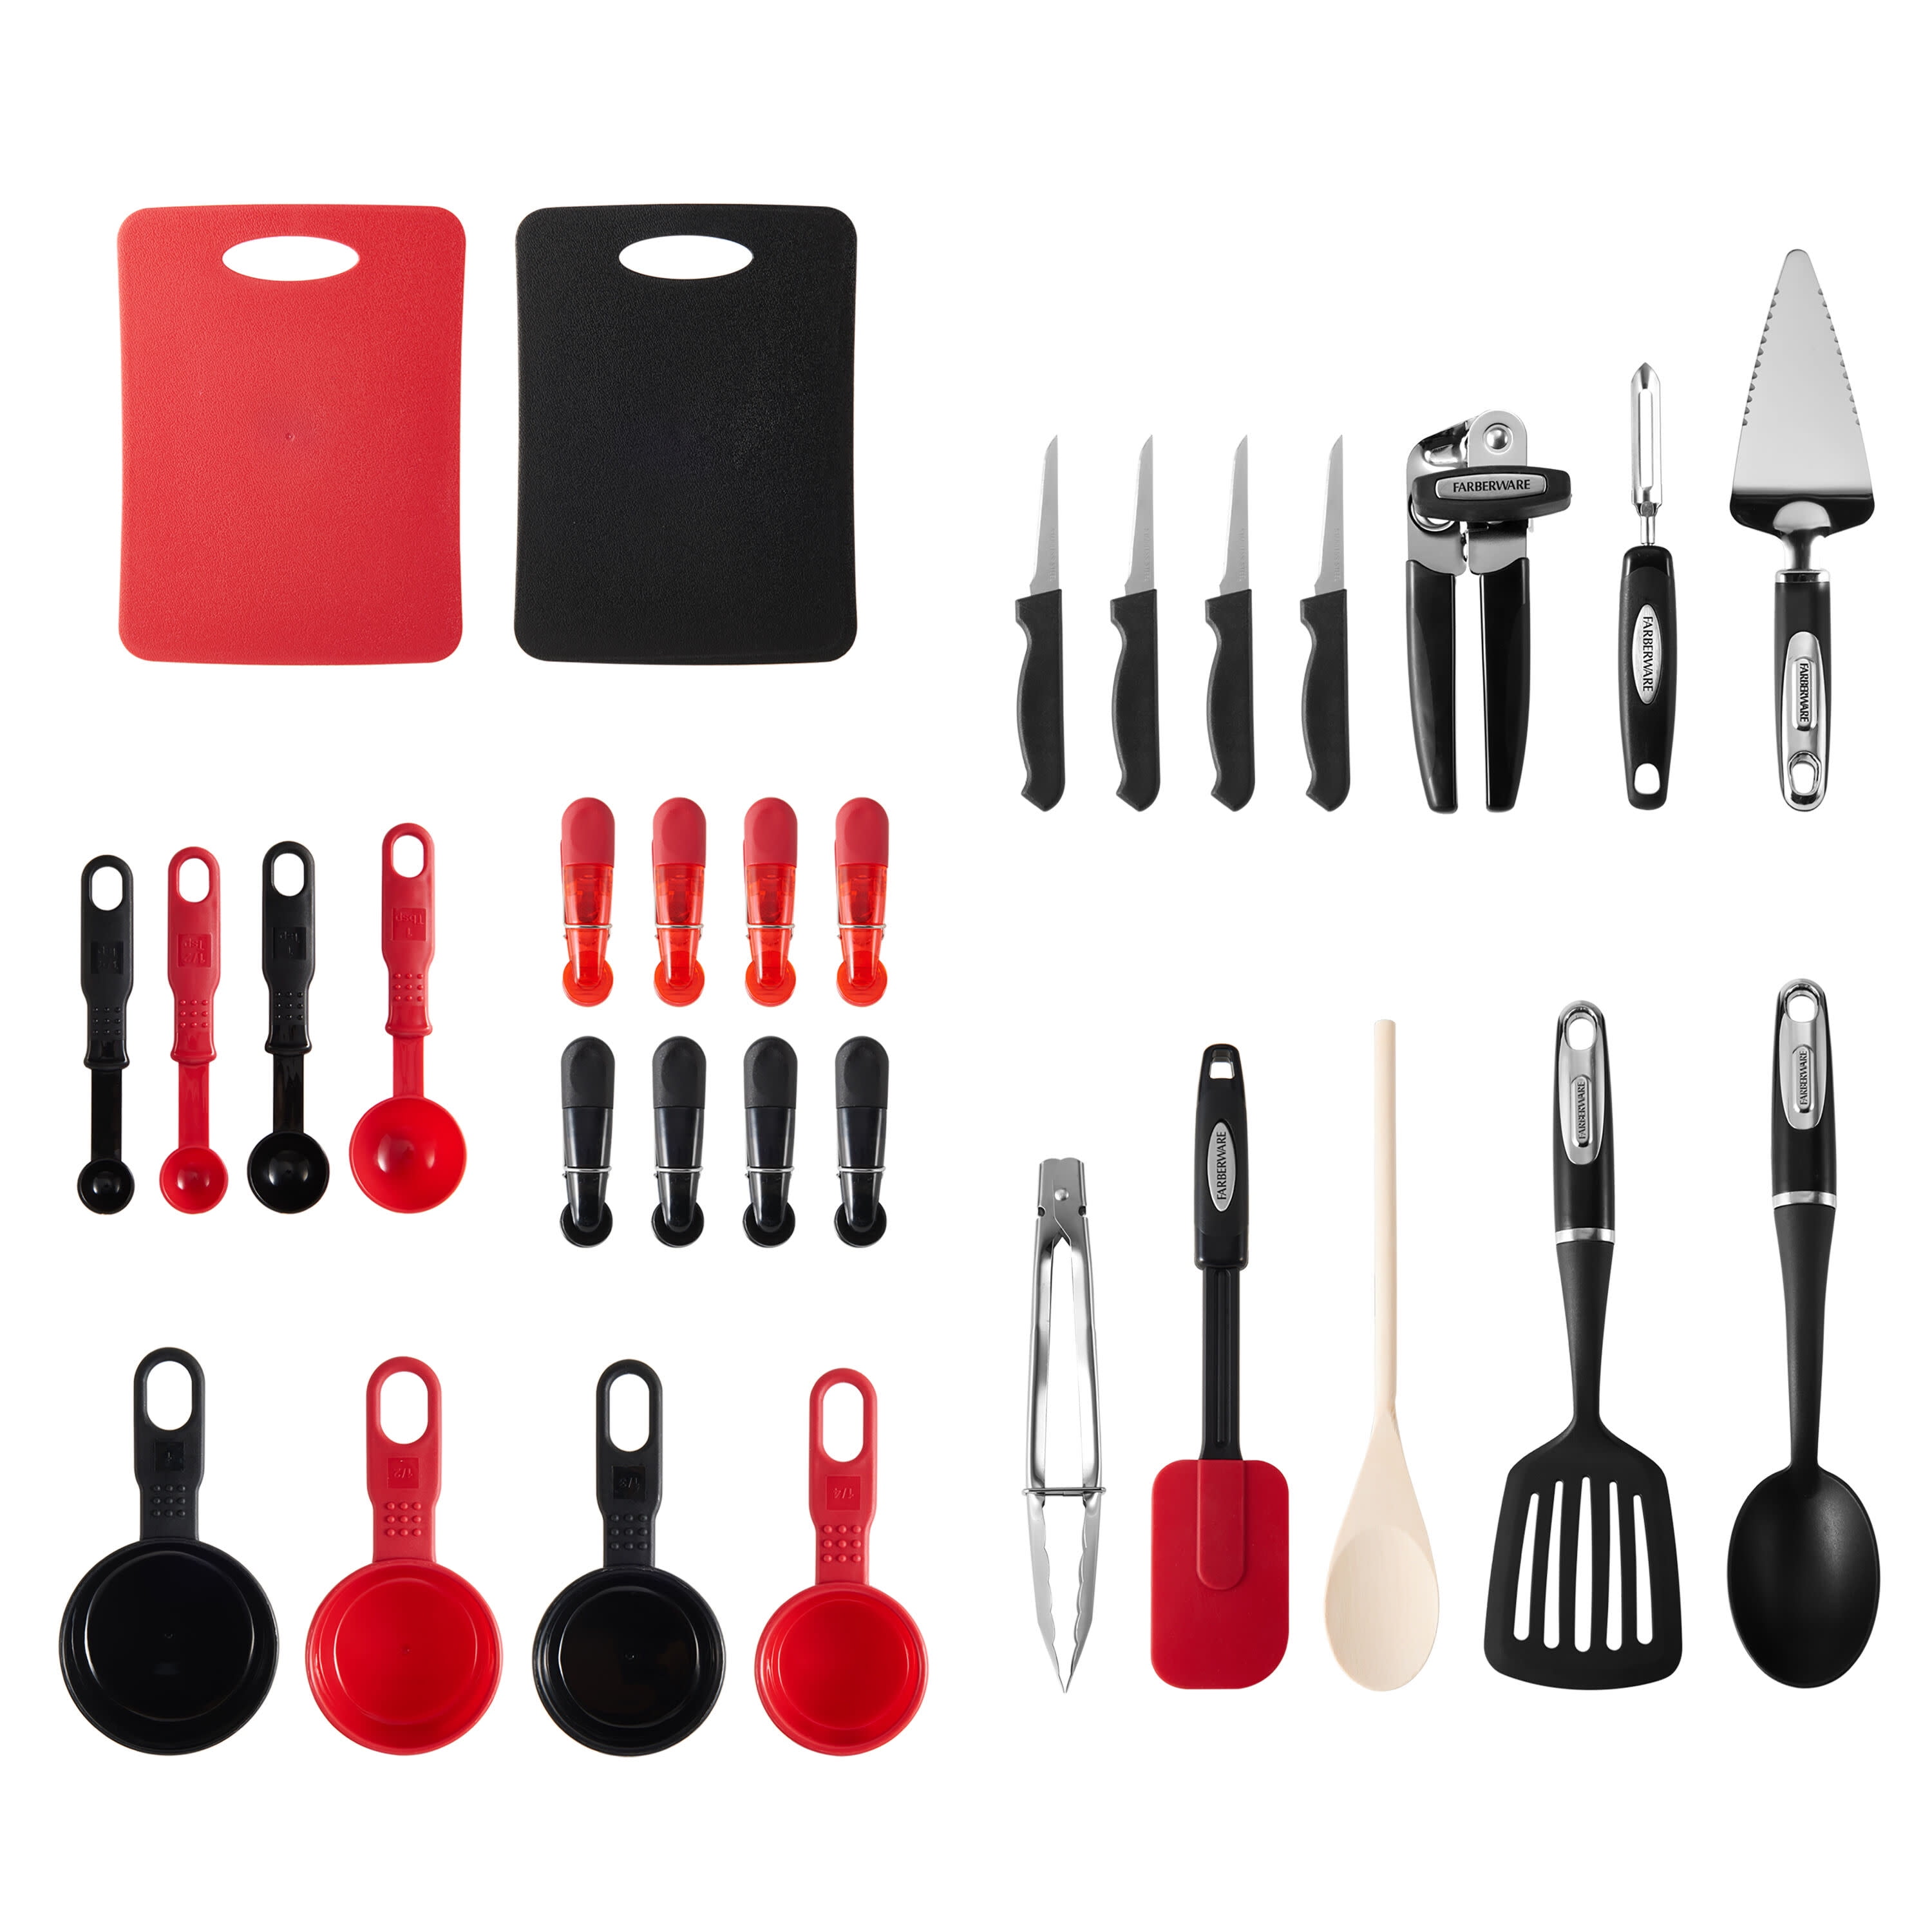 Farberware 28-piece Kitchen Utensil & Gadget Set in Assorted Colors usa